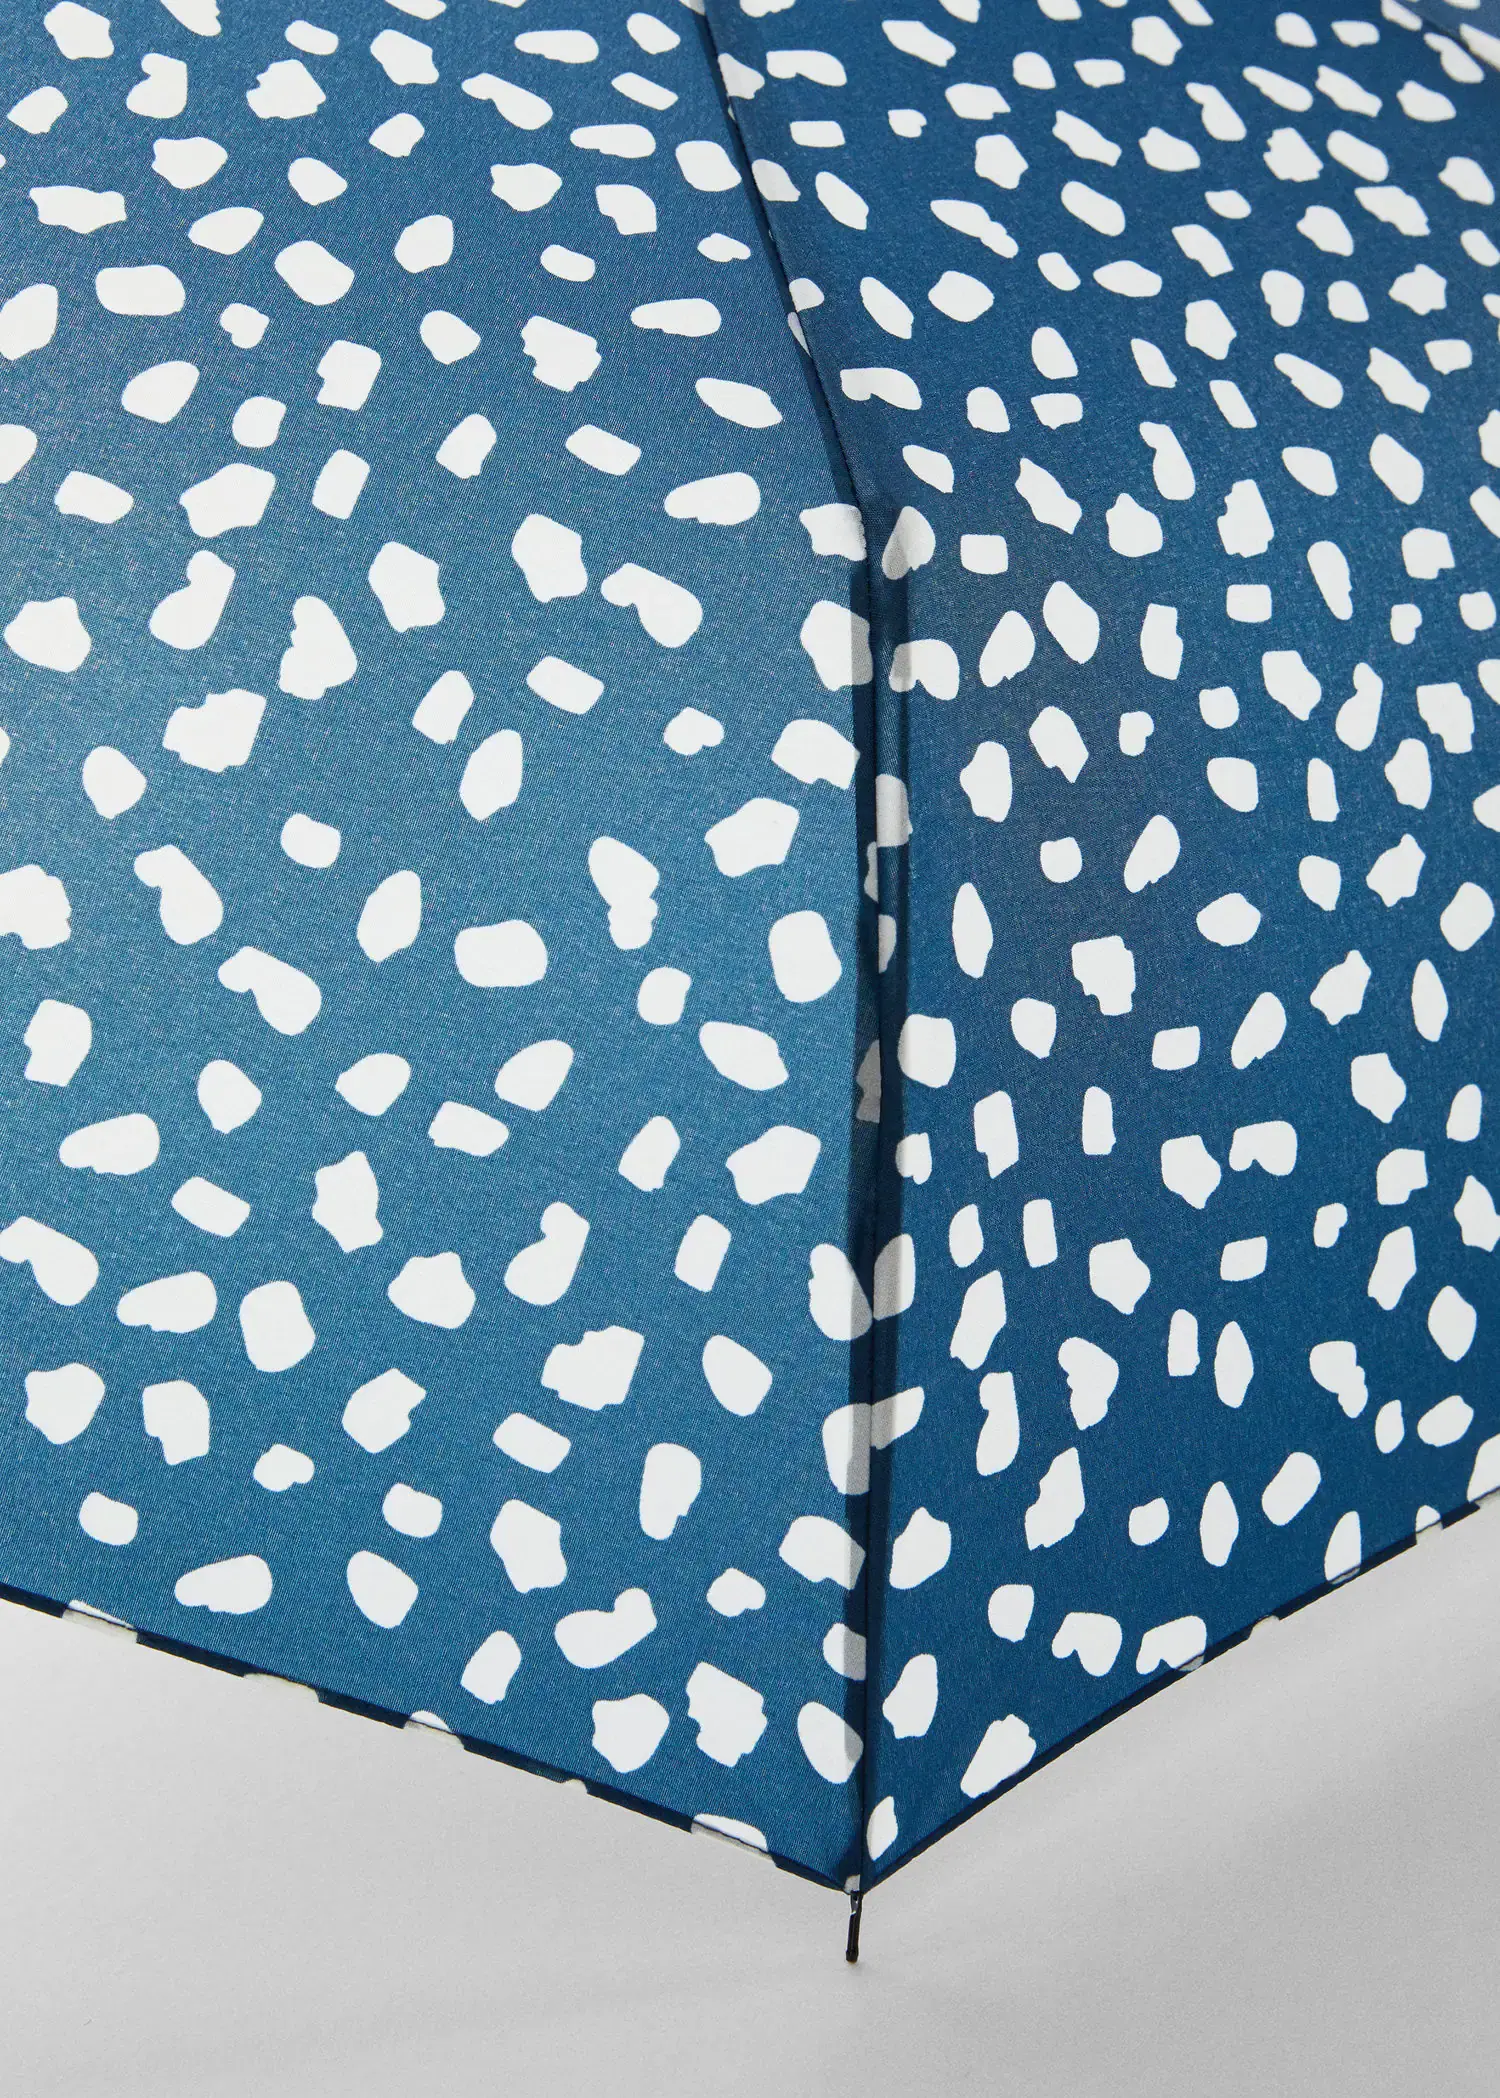 Mango Print folding umbrella. a close-up view of the corner of a bed. 